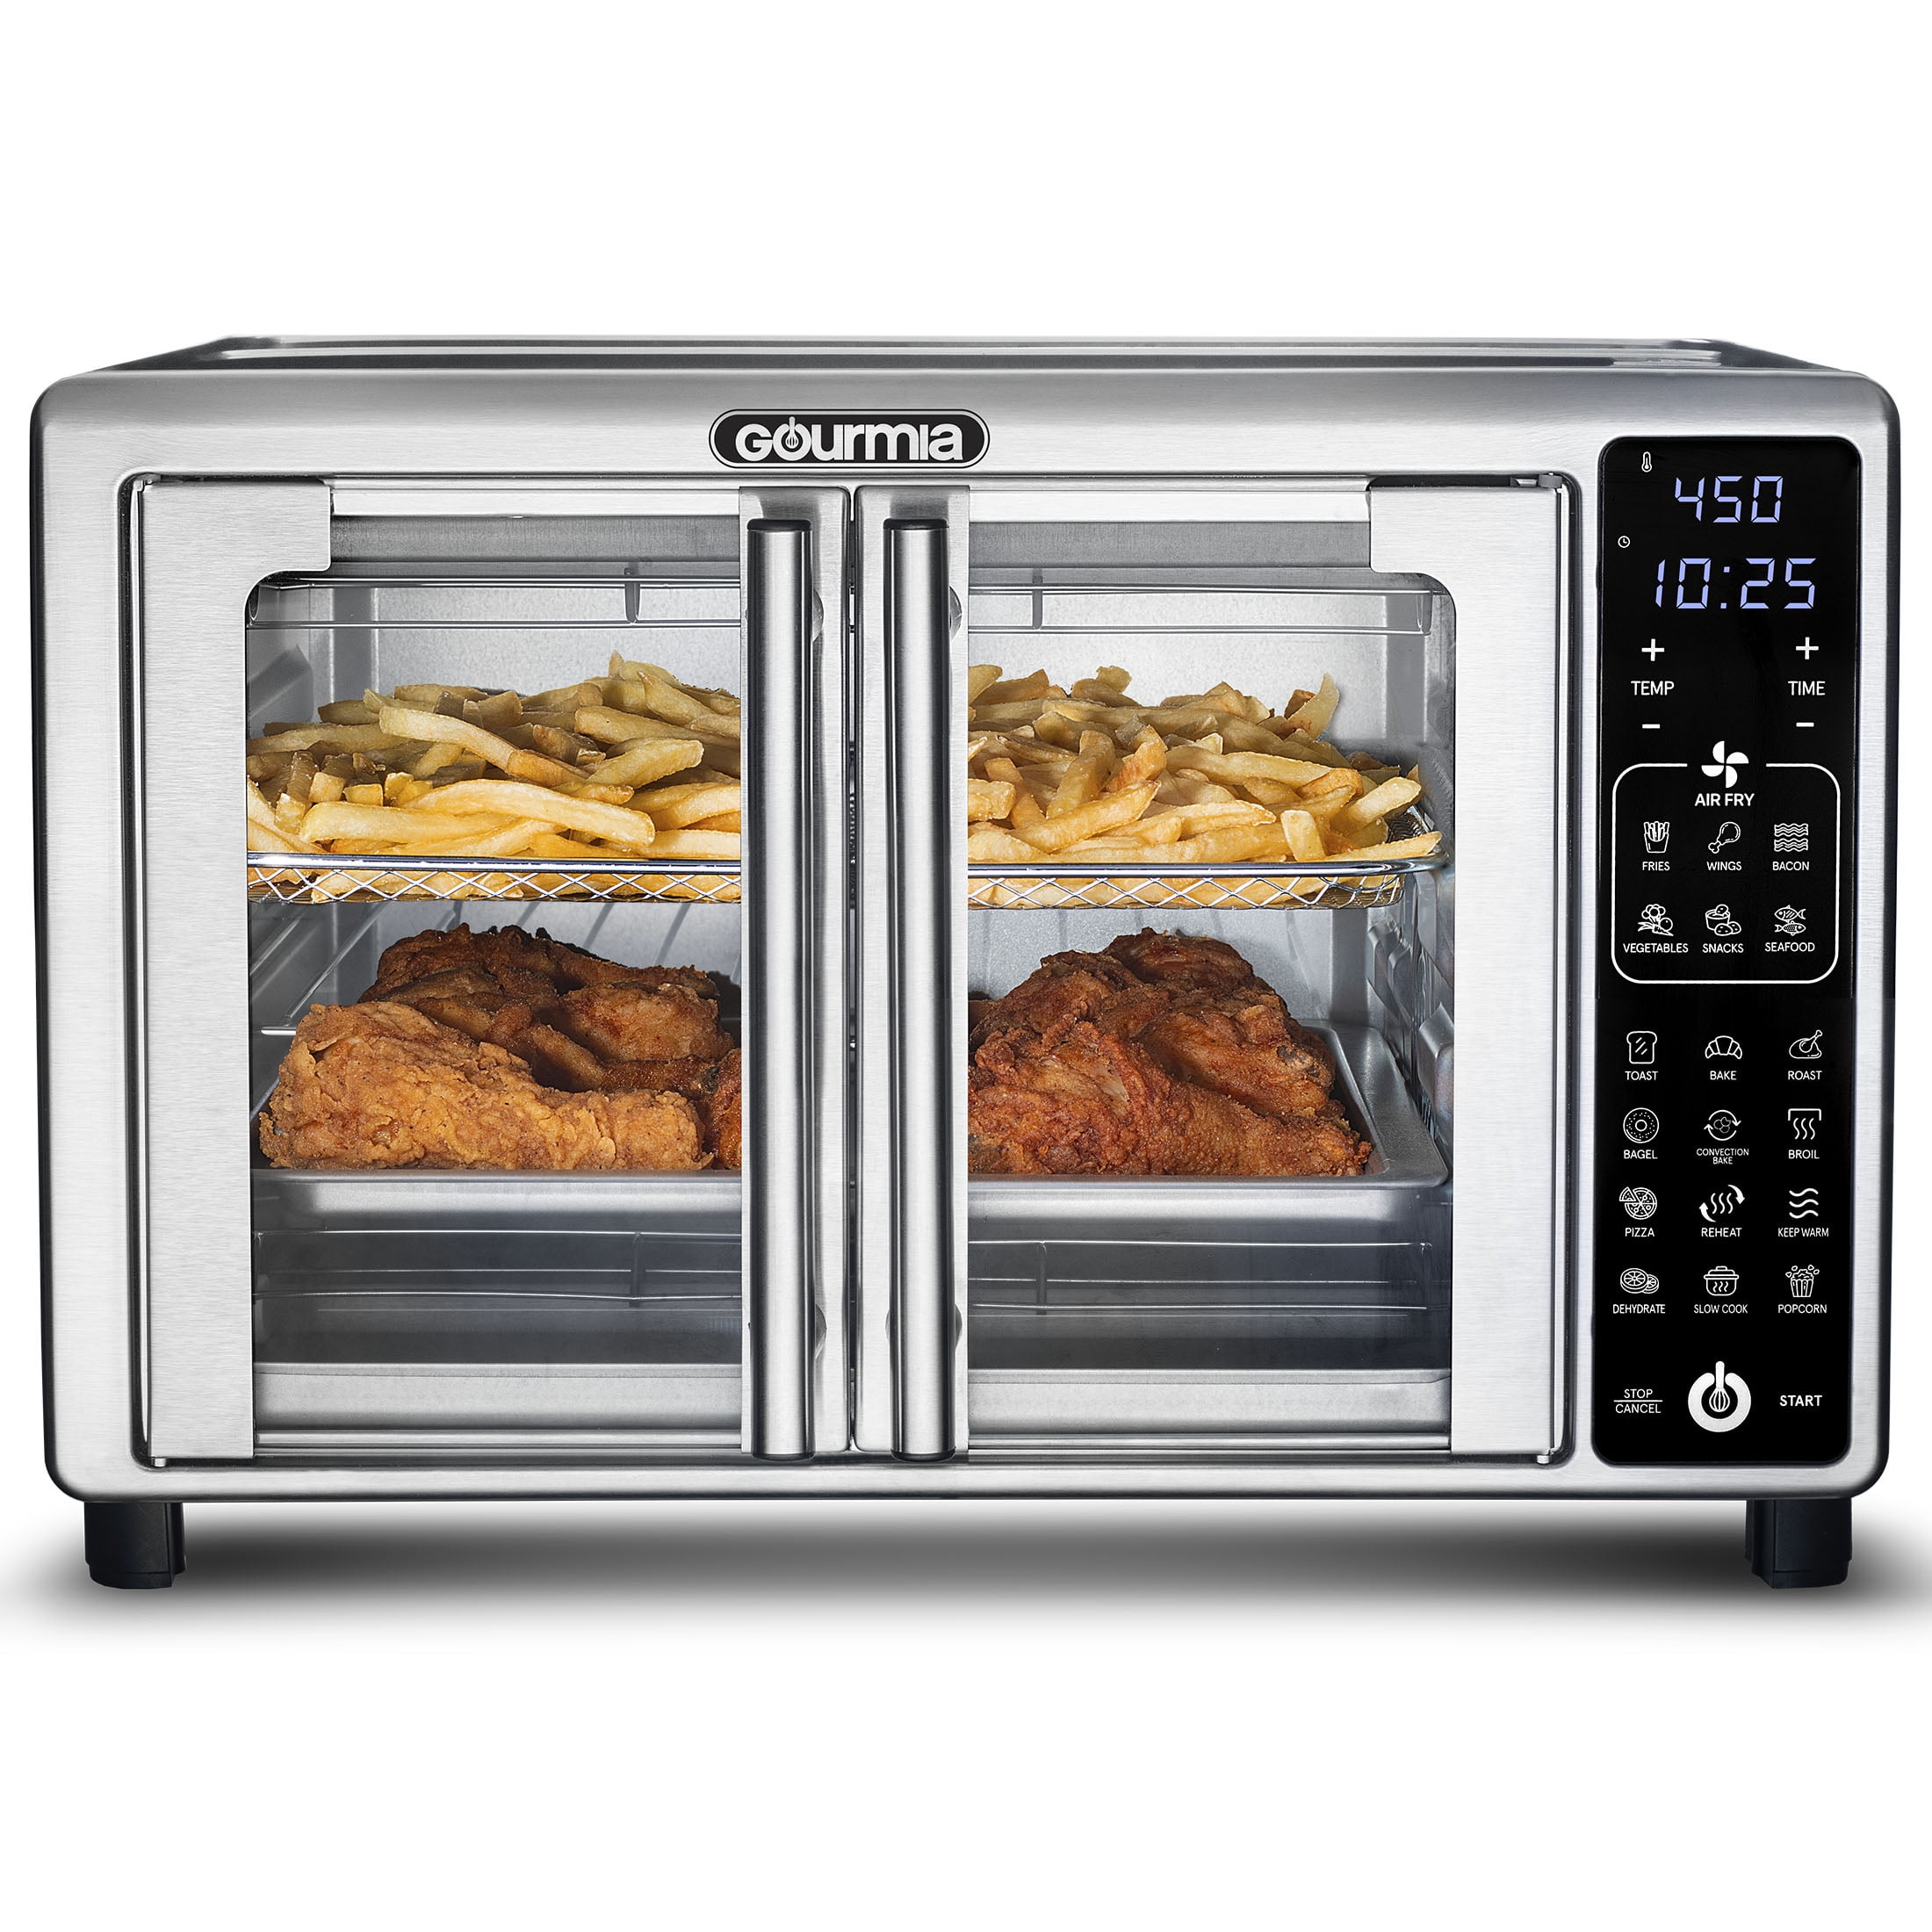 BLACK+DECKER 6-Slice Crisp 'N Bake Air Fry Toaster Oven, TO3217SS 